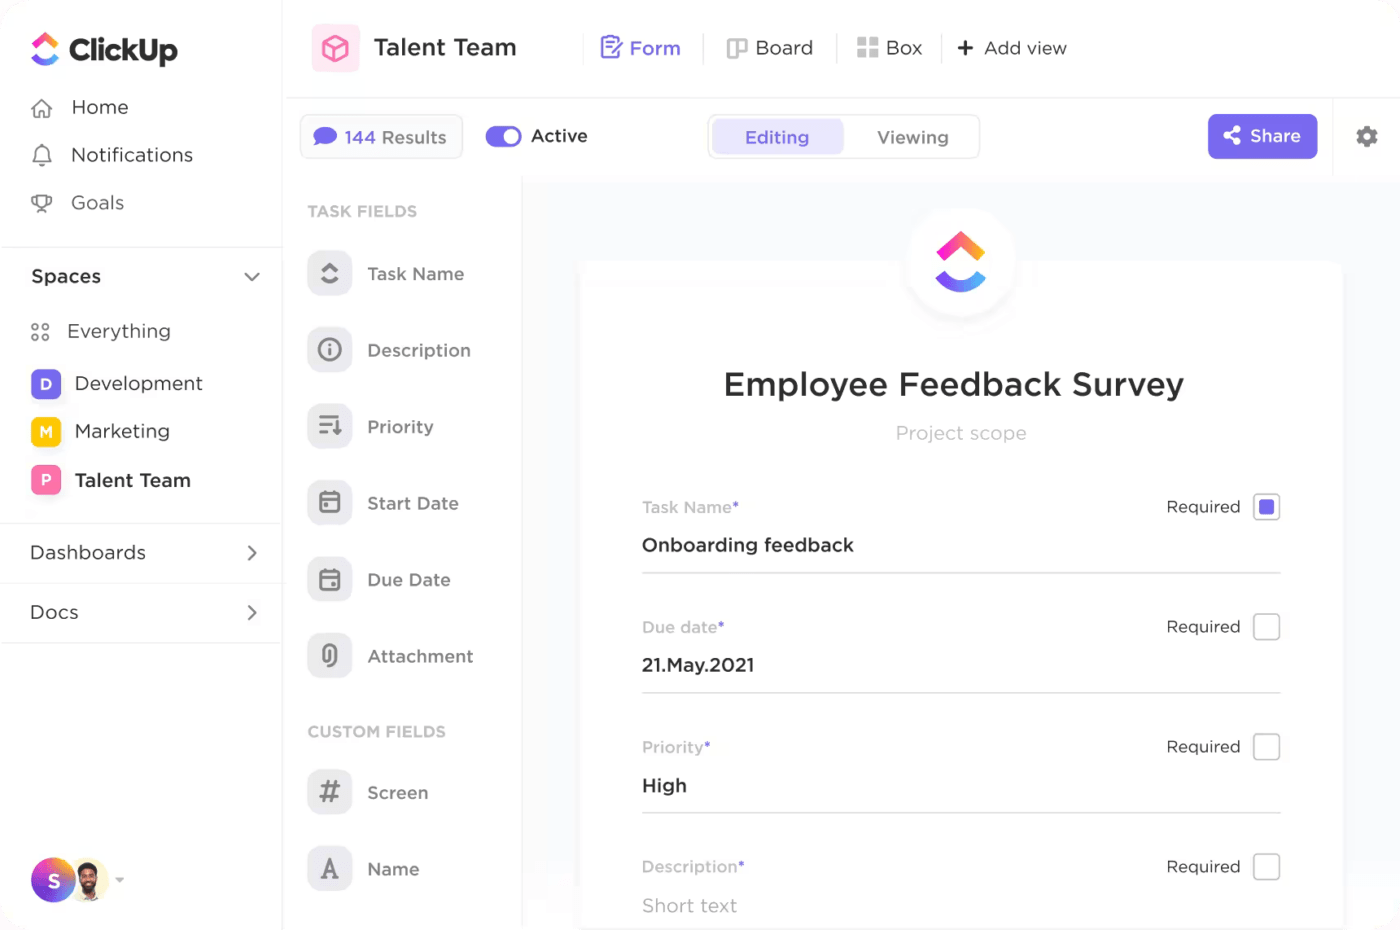 ClickUp's Employee Feedback Survey Form